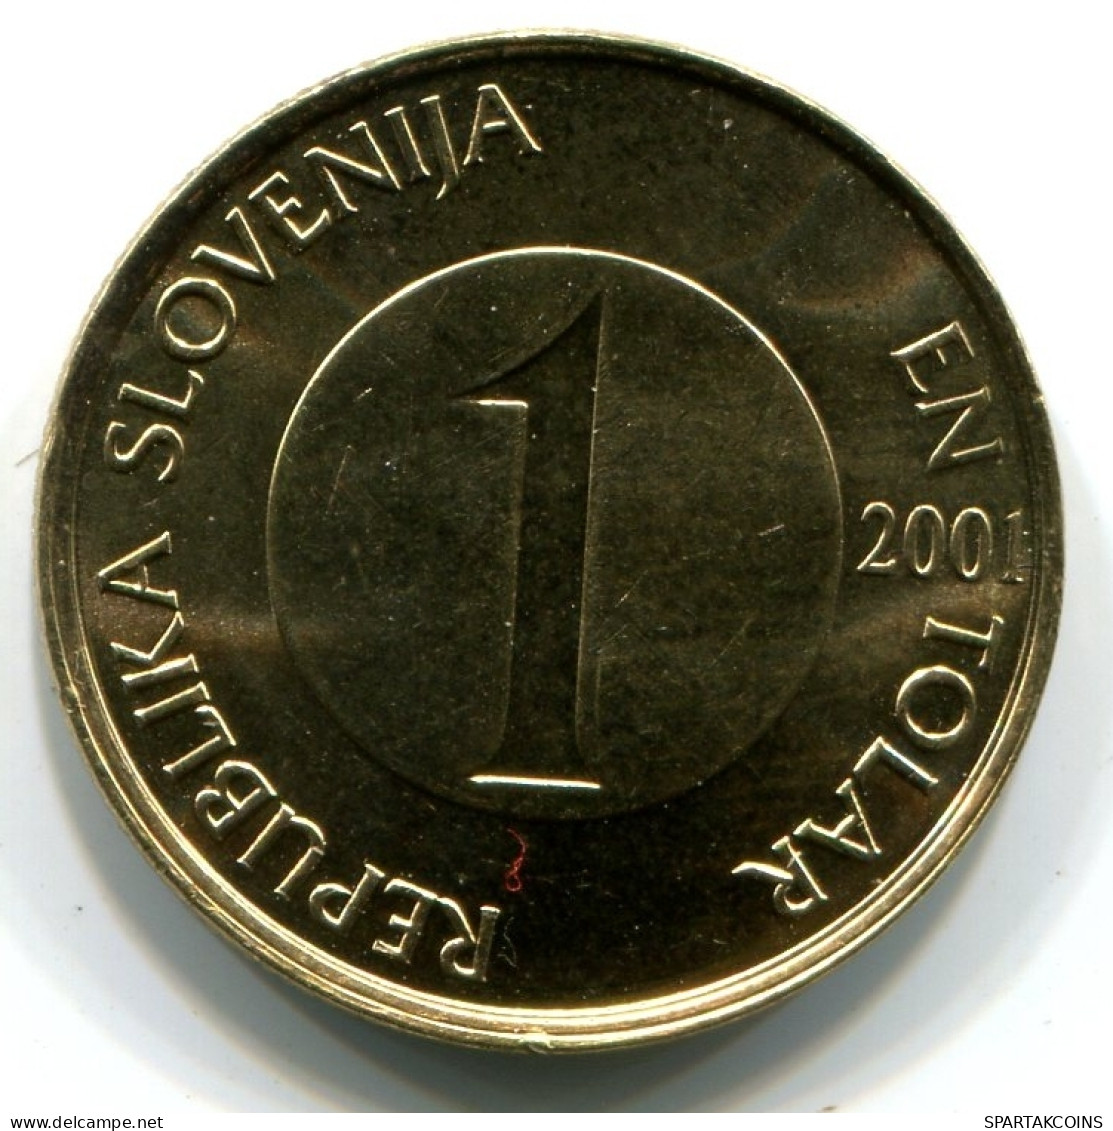 1 TOLAR 2001 SLOVENIA UNC Fish Coin #W11370.U - Slovenië